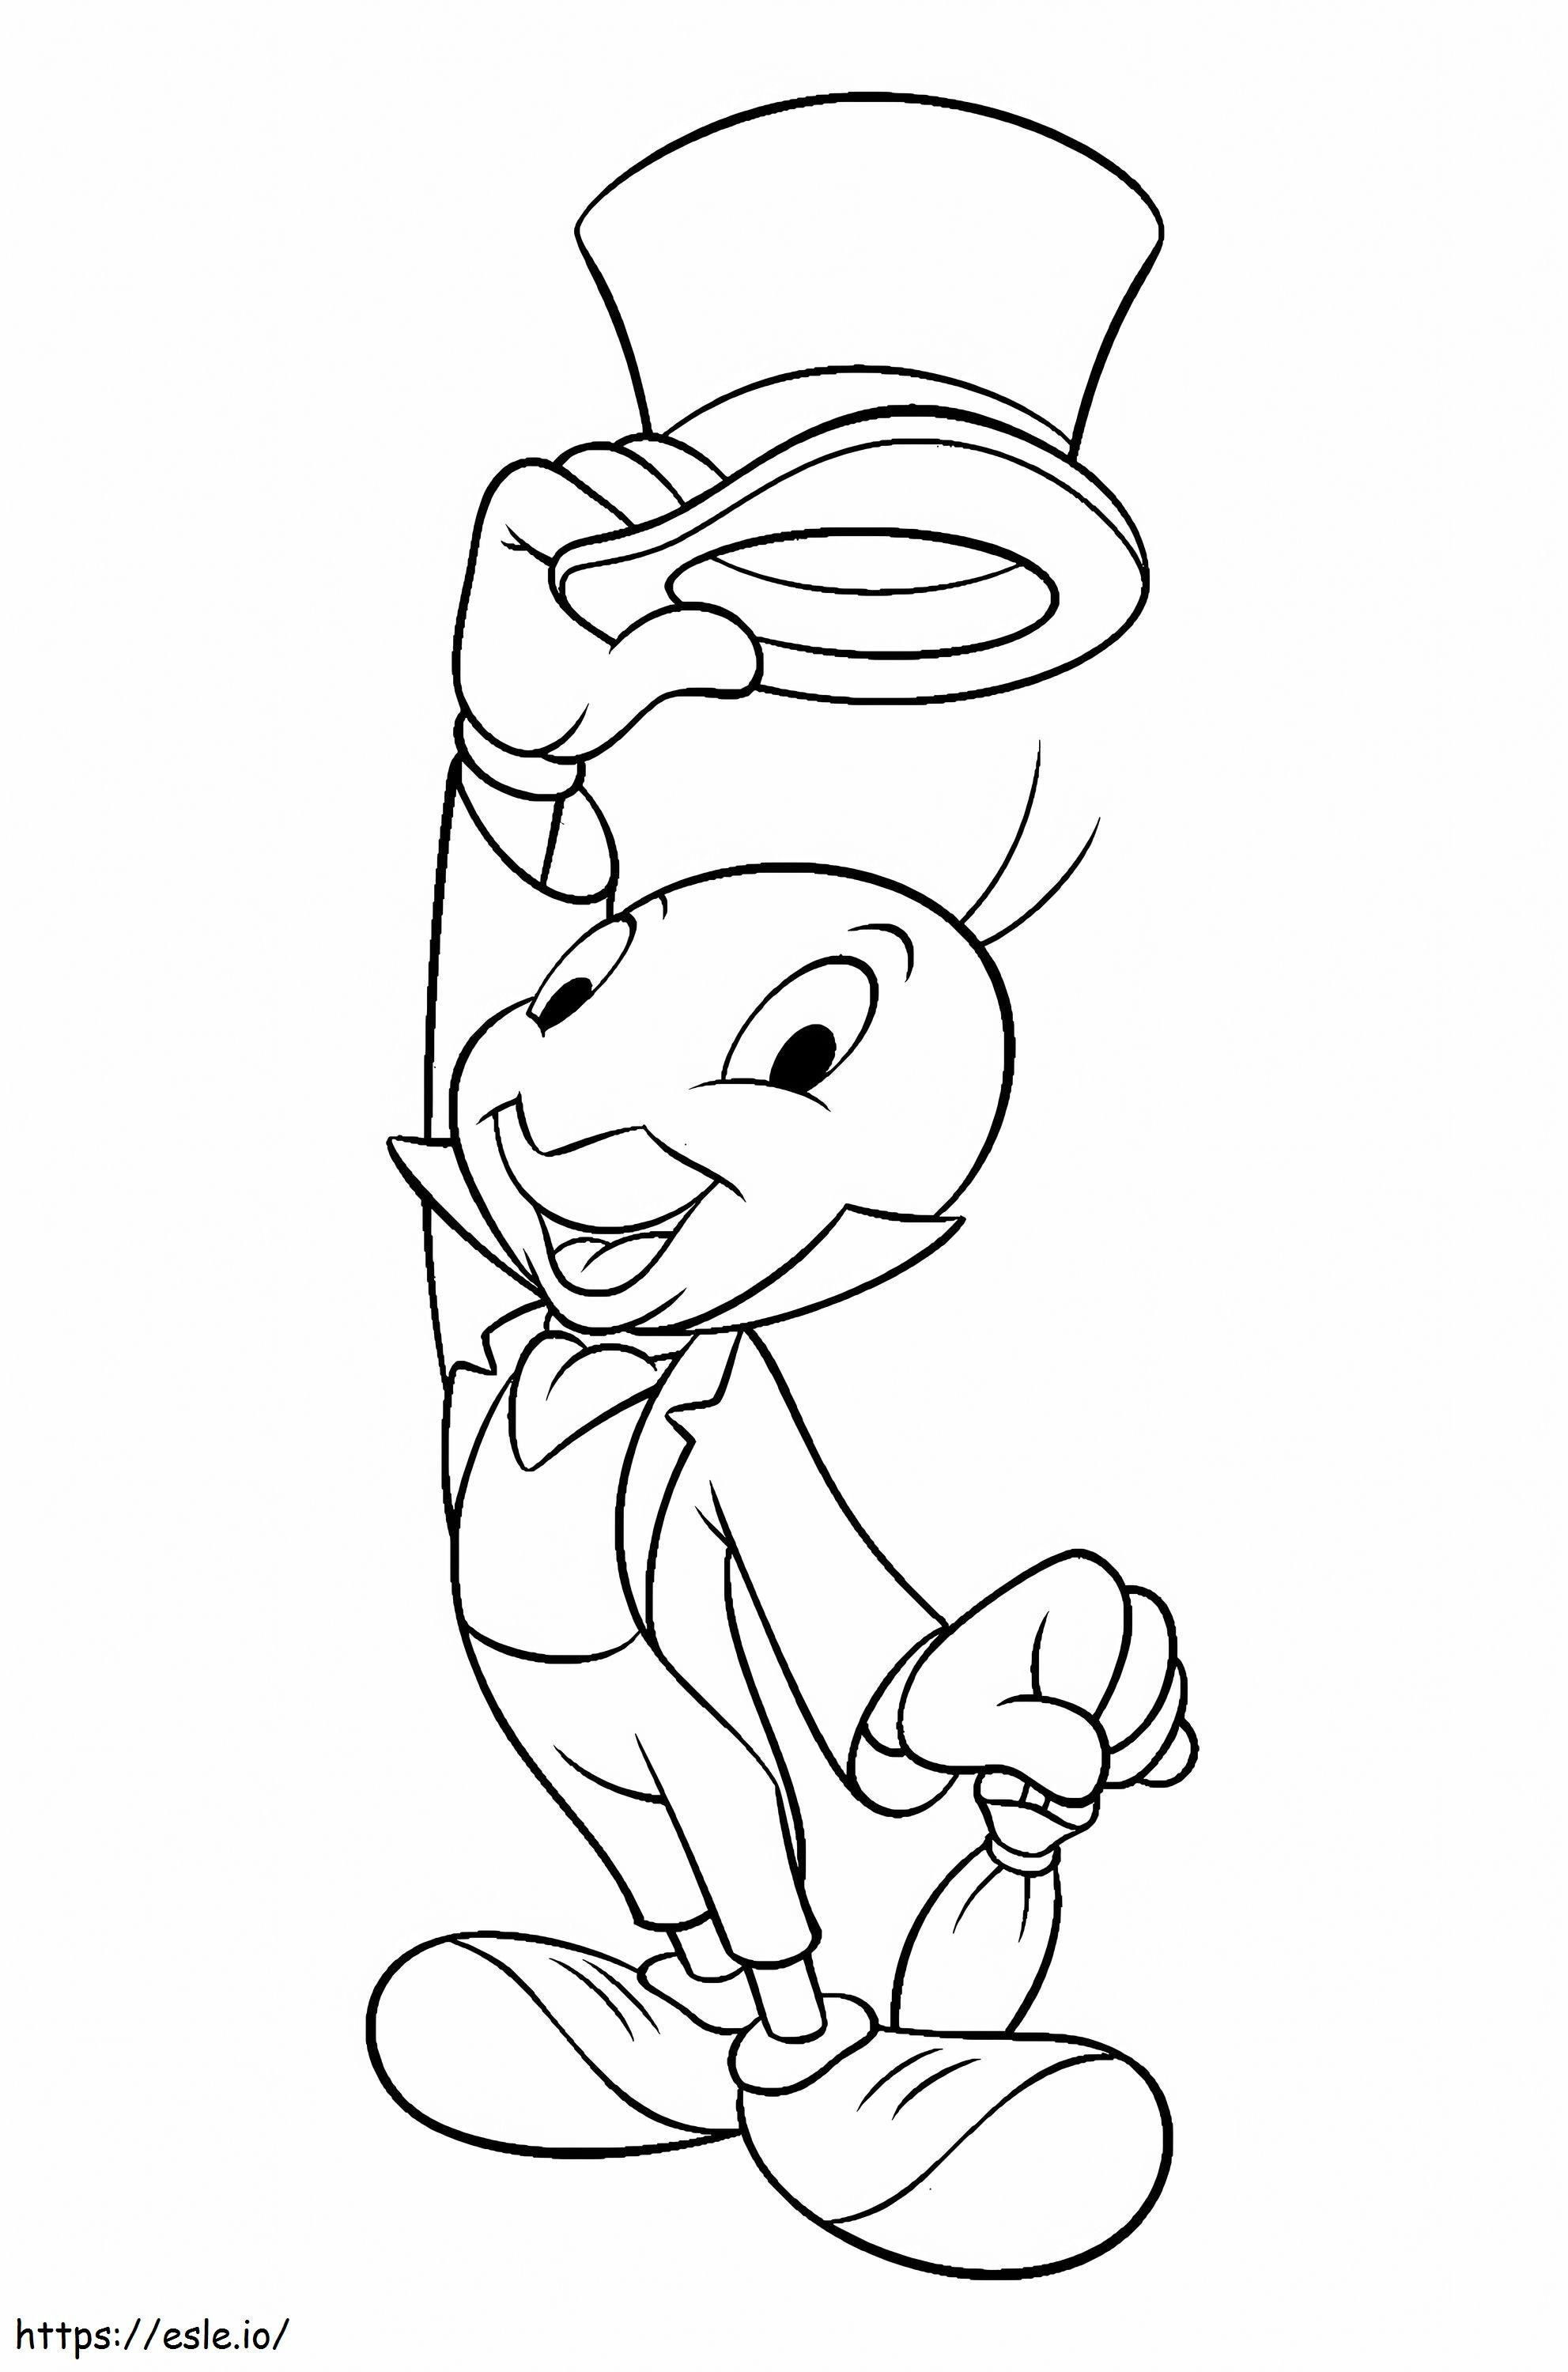 1545725391 Disney Jiminy Cricket 14 I Ücretsiz Yazdırılabilir Disney Jiminy Cricket Noel Çocuklar İçin Çıktı Çizgi Film Disney Jiminy Cricket Presc İçin Noel boyama